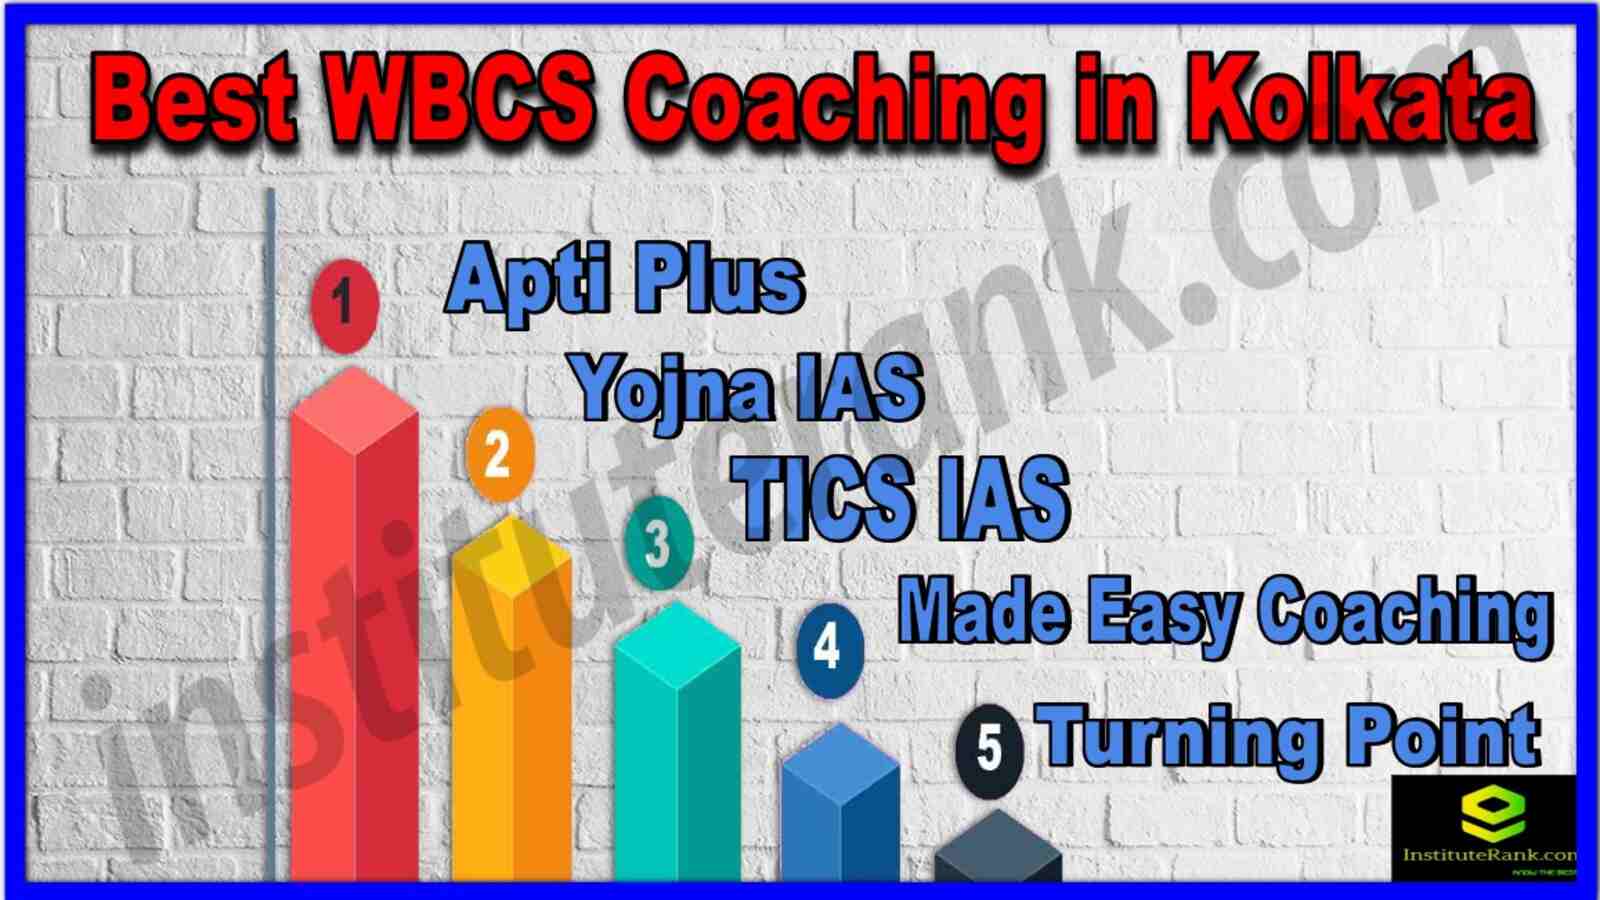 Best WBCS Coaching in Kolkata